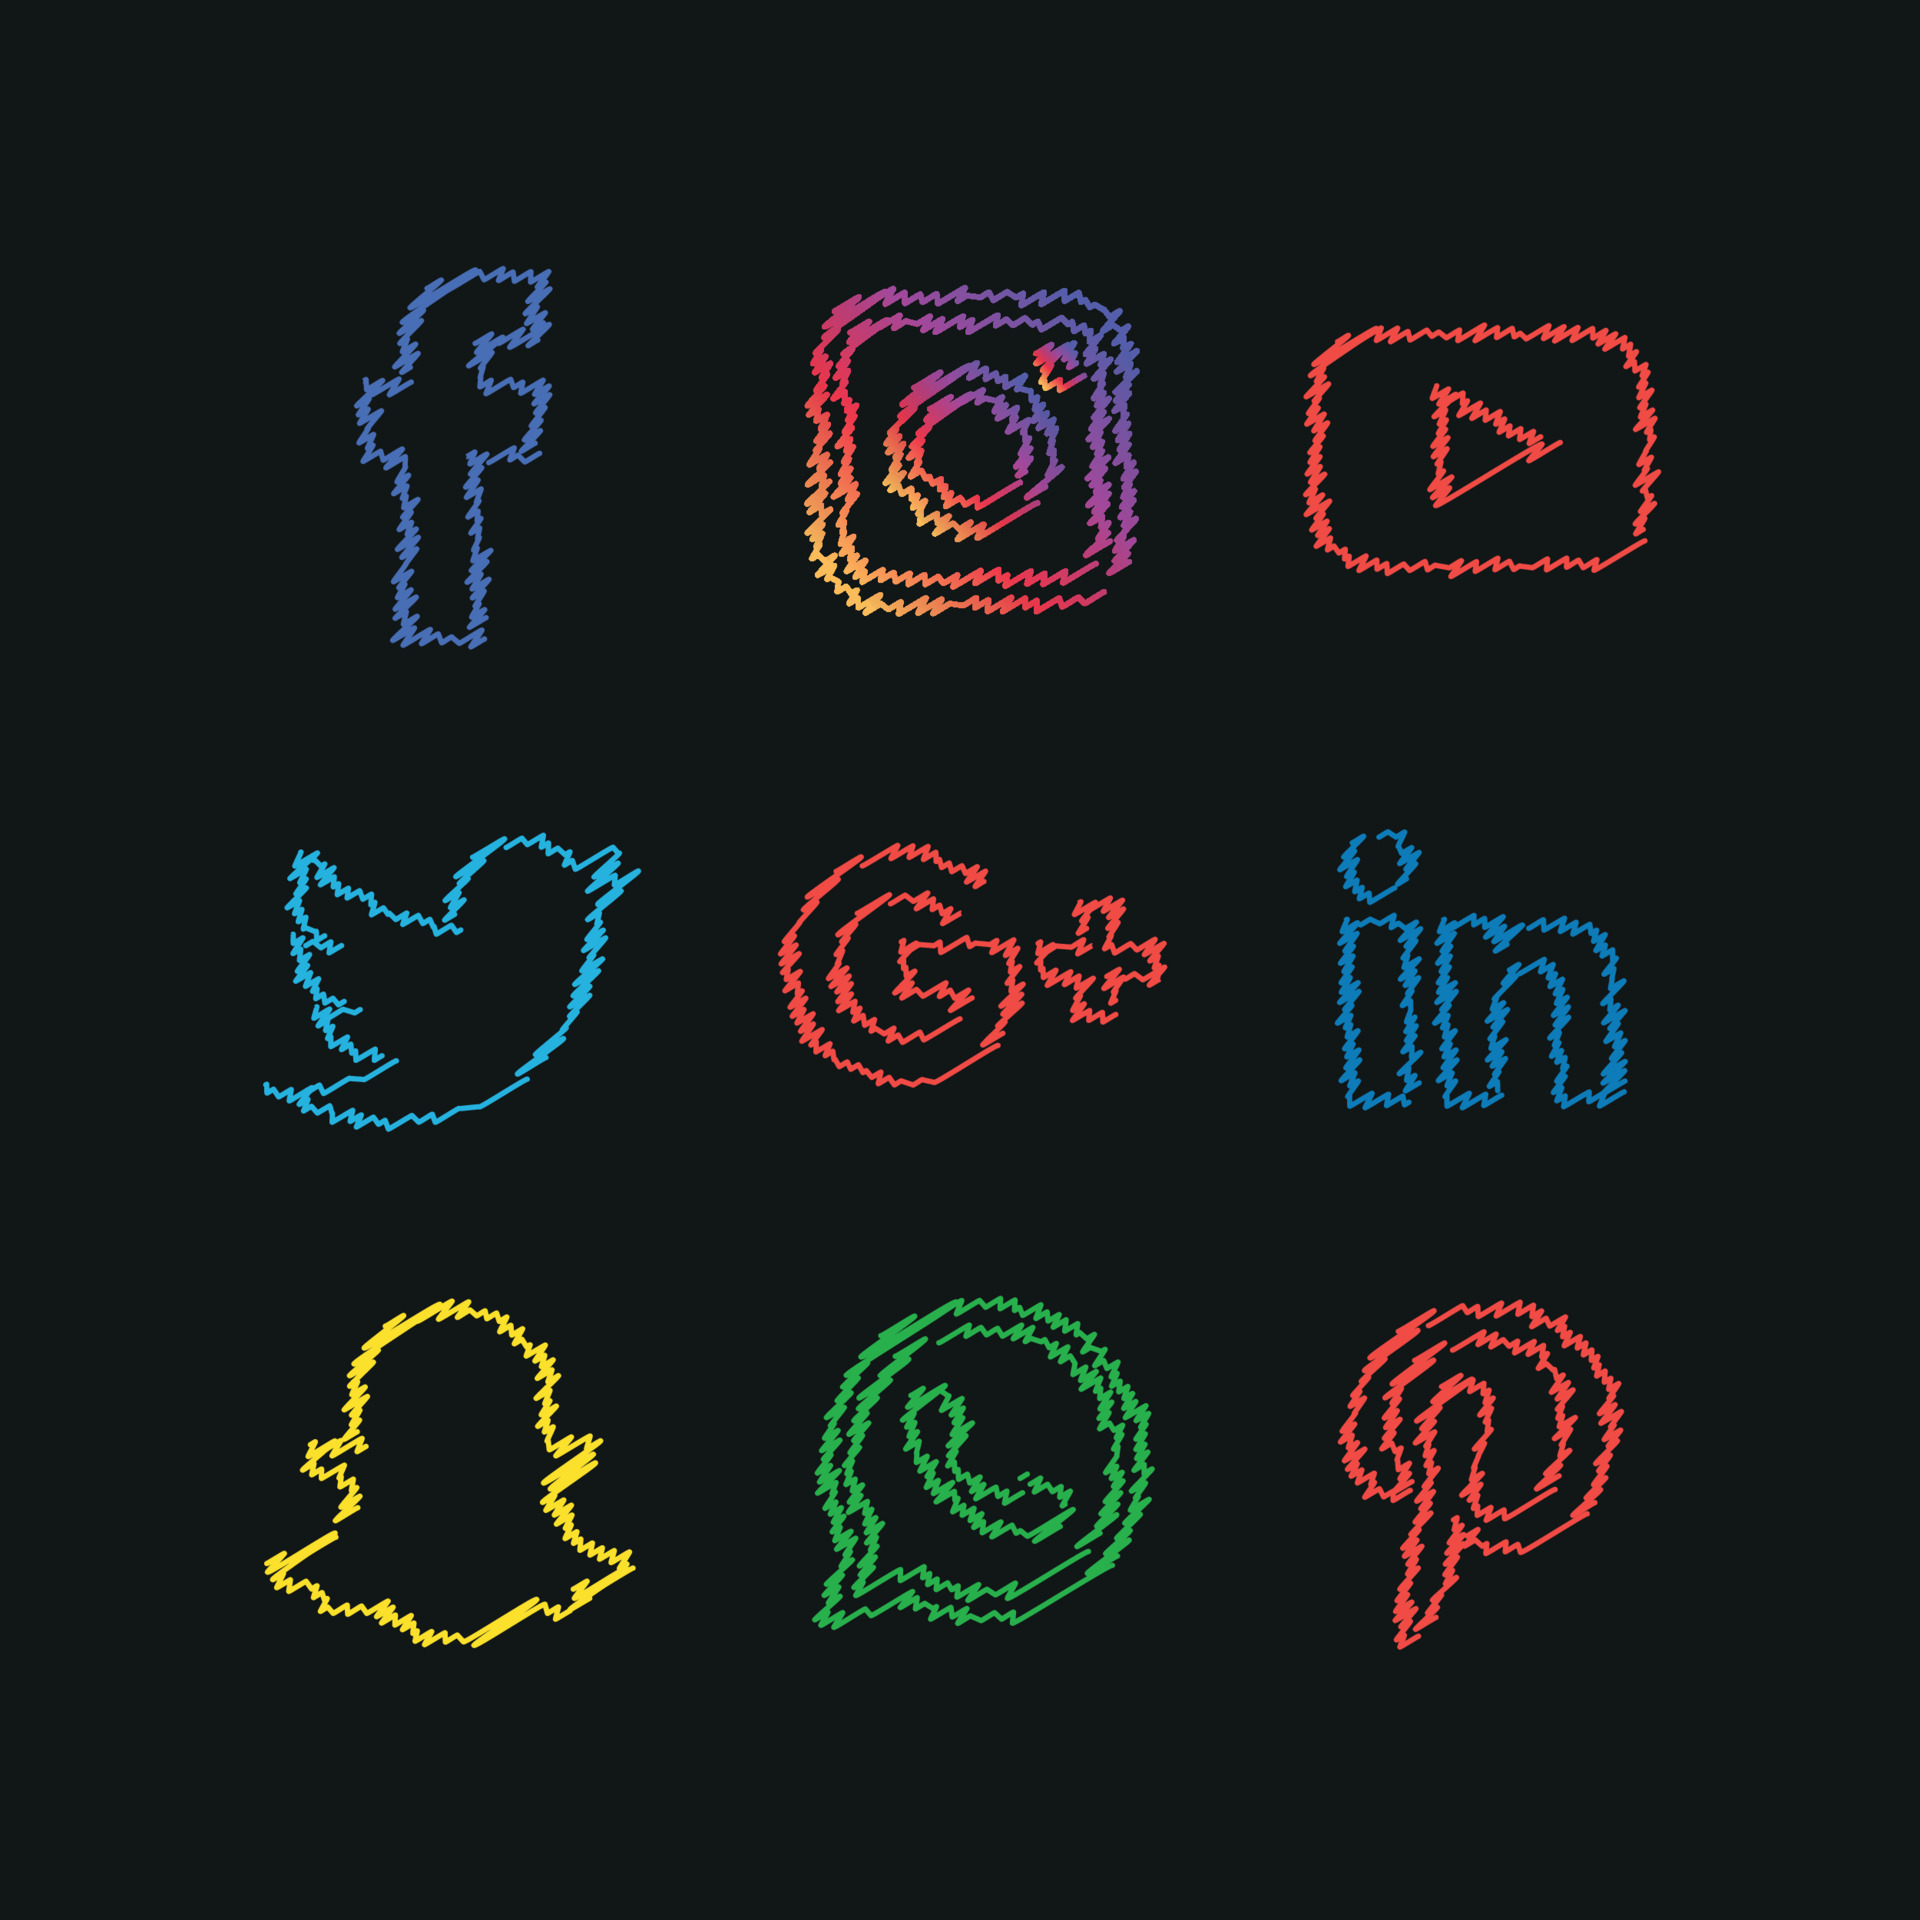 twitter and facebook logo black background